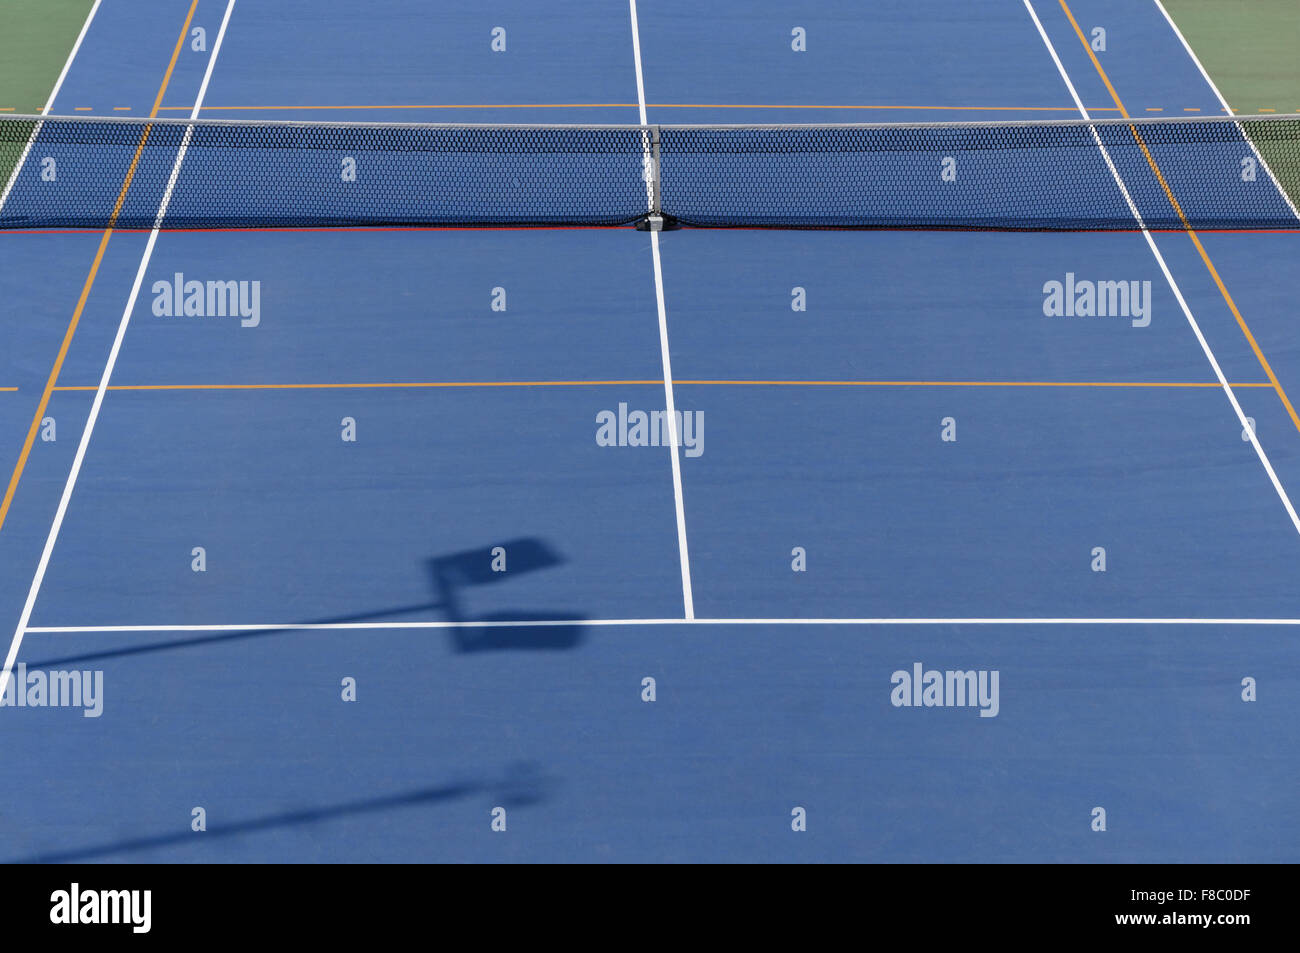 blue surface tennis court Stock Photo